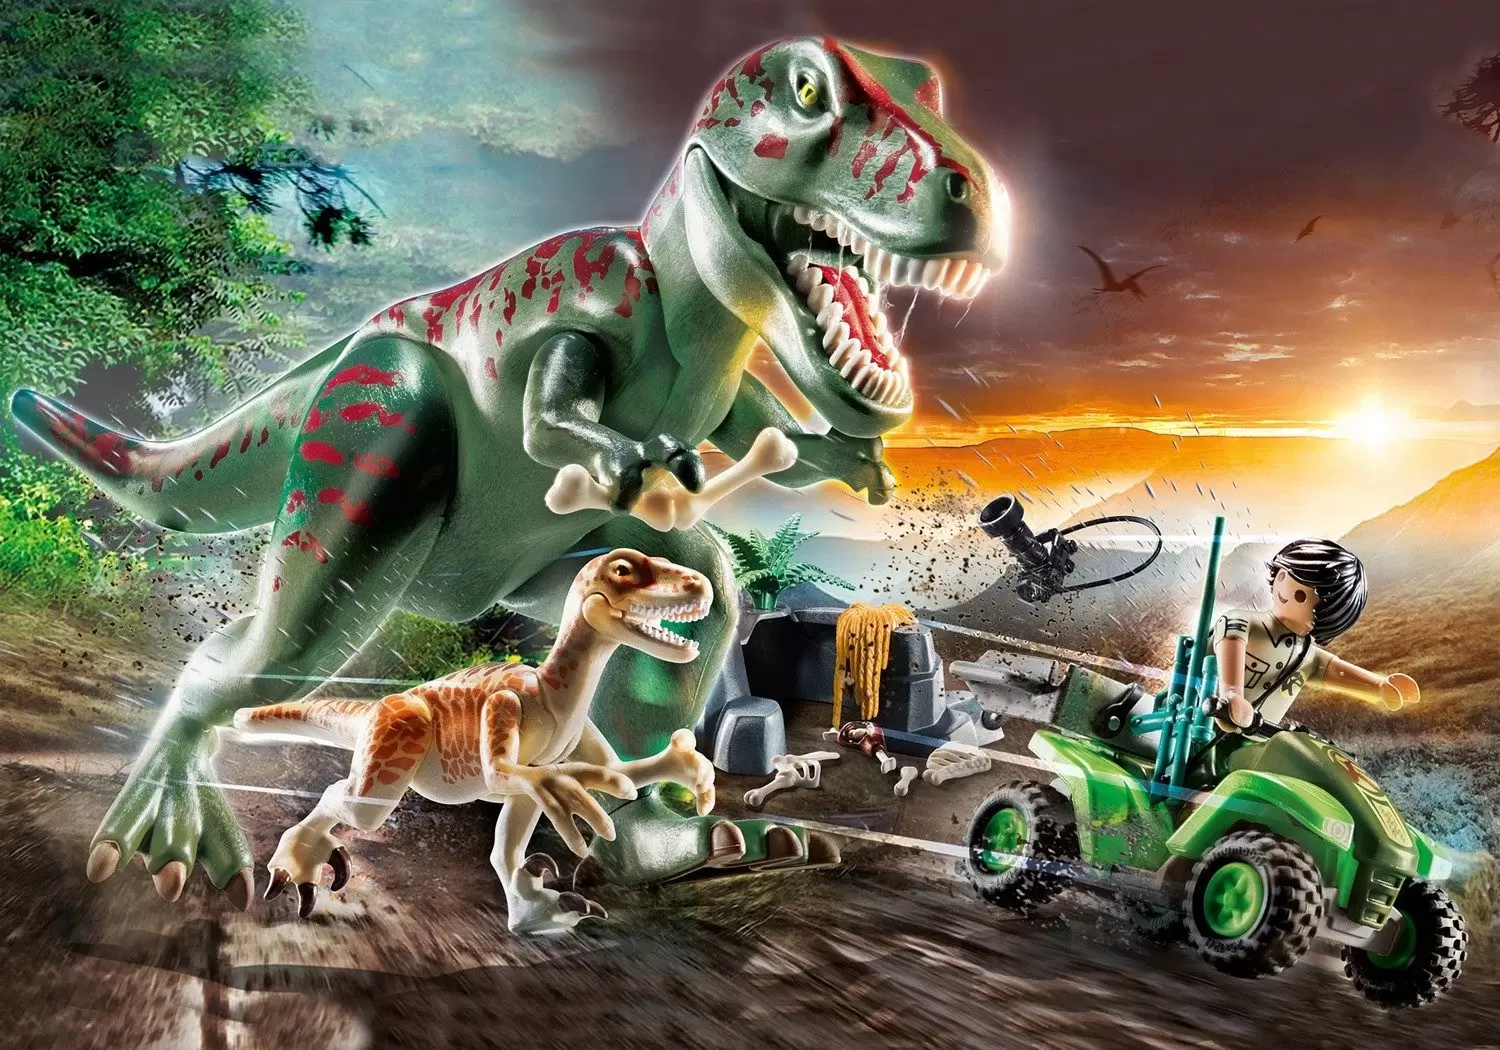 Playmobil dinosaures - T-Rex Attack